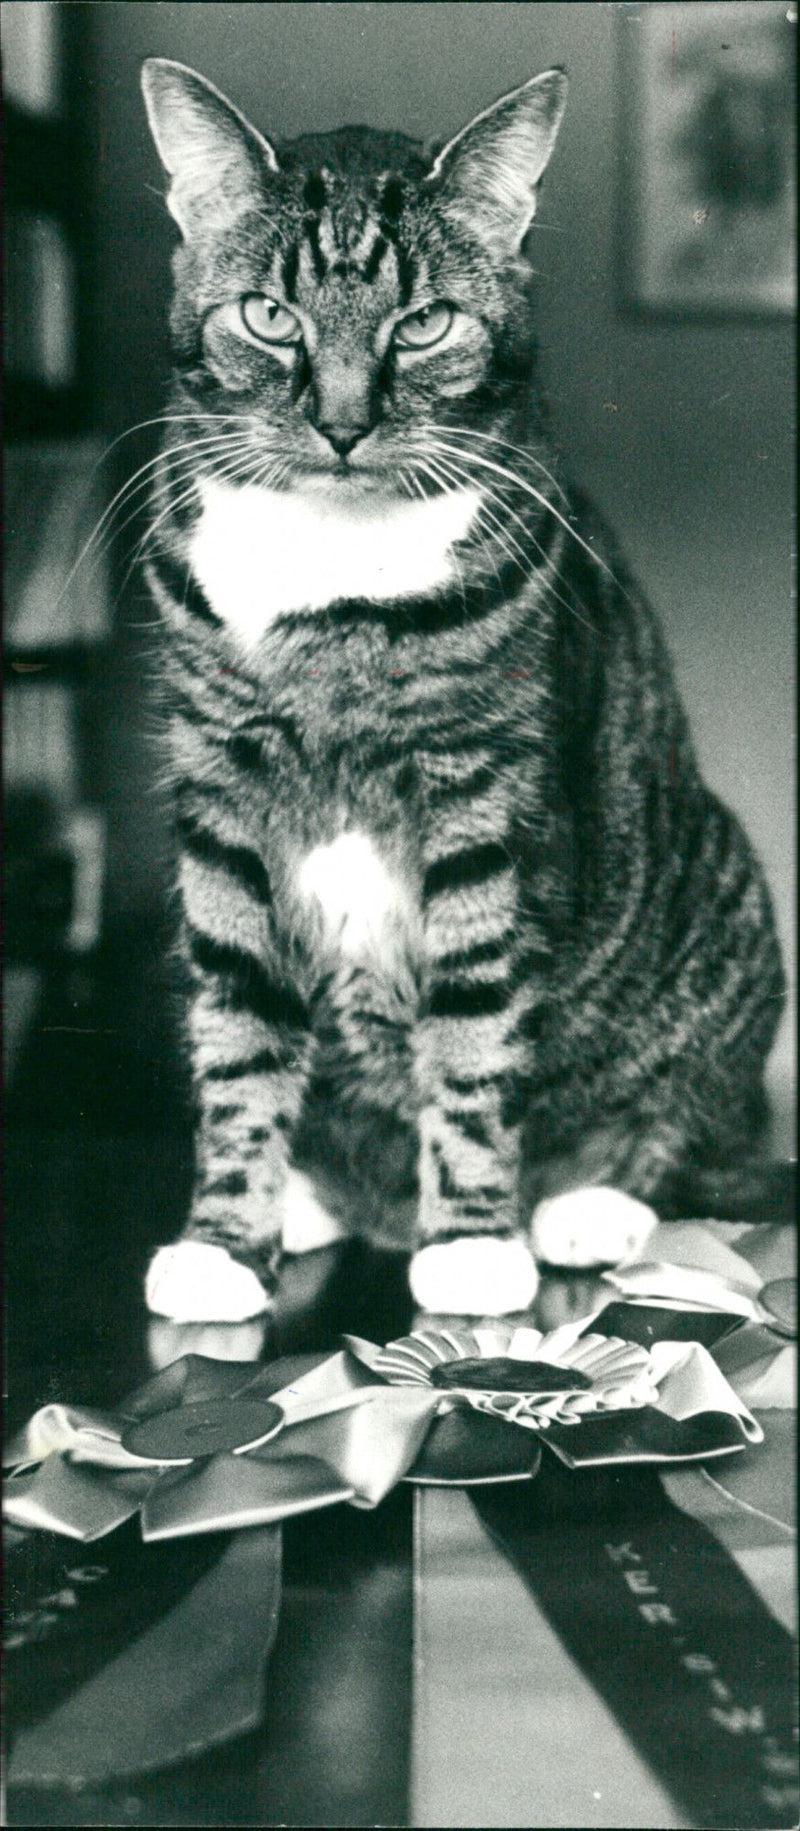 1995 ANIMALS CATS SHELF ARCHIVE PHOTO KIV VKS SEORA FOLDER FARM - Vintage Photograph